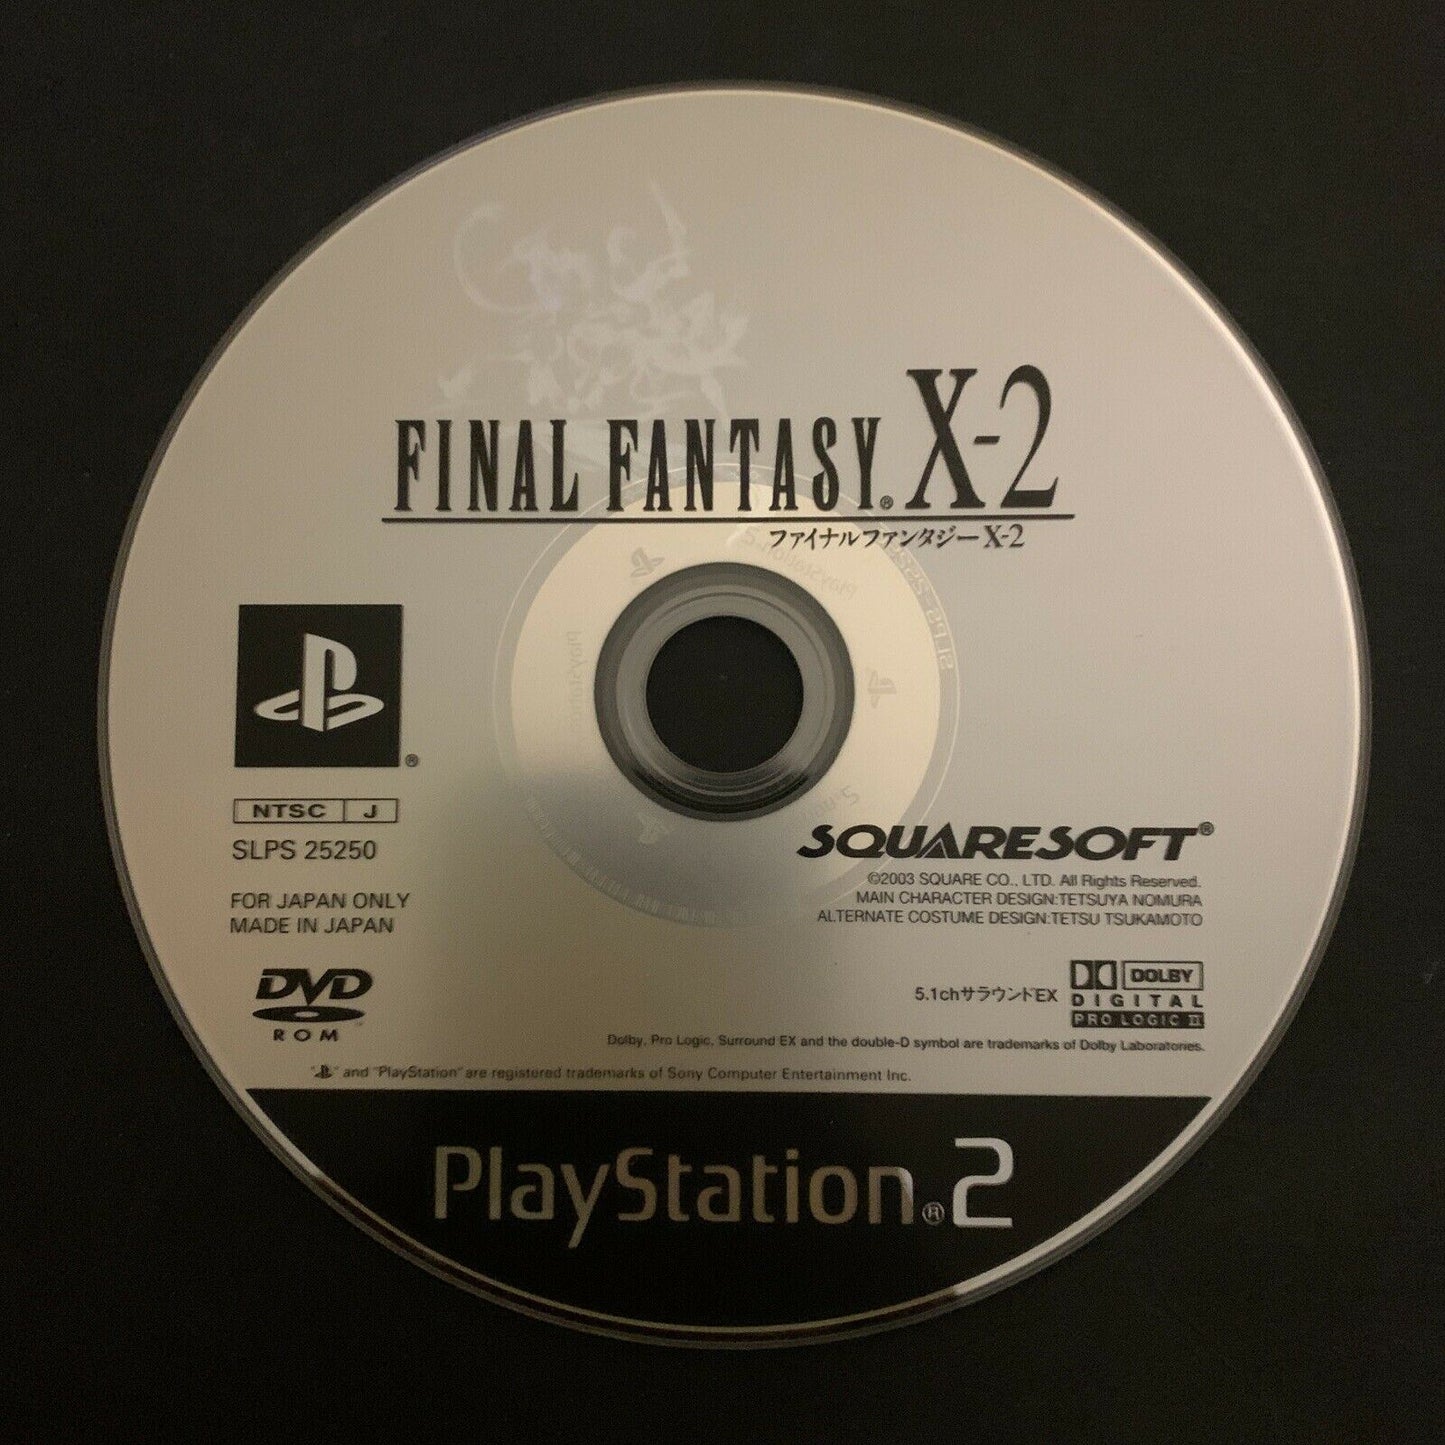 Final Fantasy X-2 - Playstation 2 PS2 NTSC-J Japan Squaresoft RPG Game w Manual